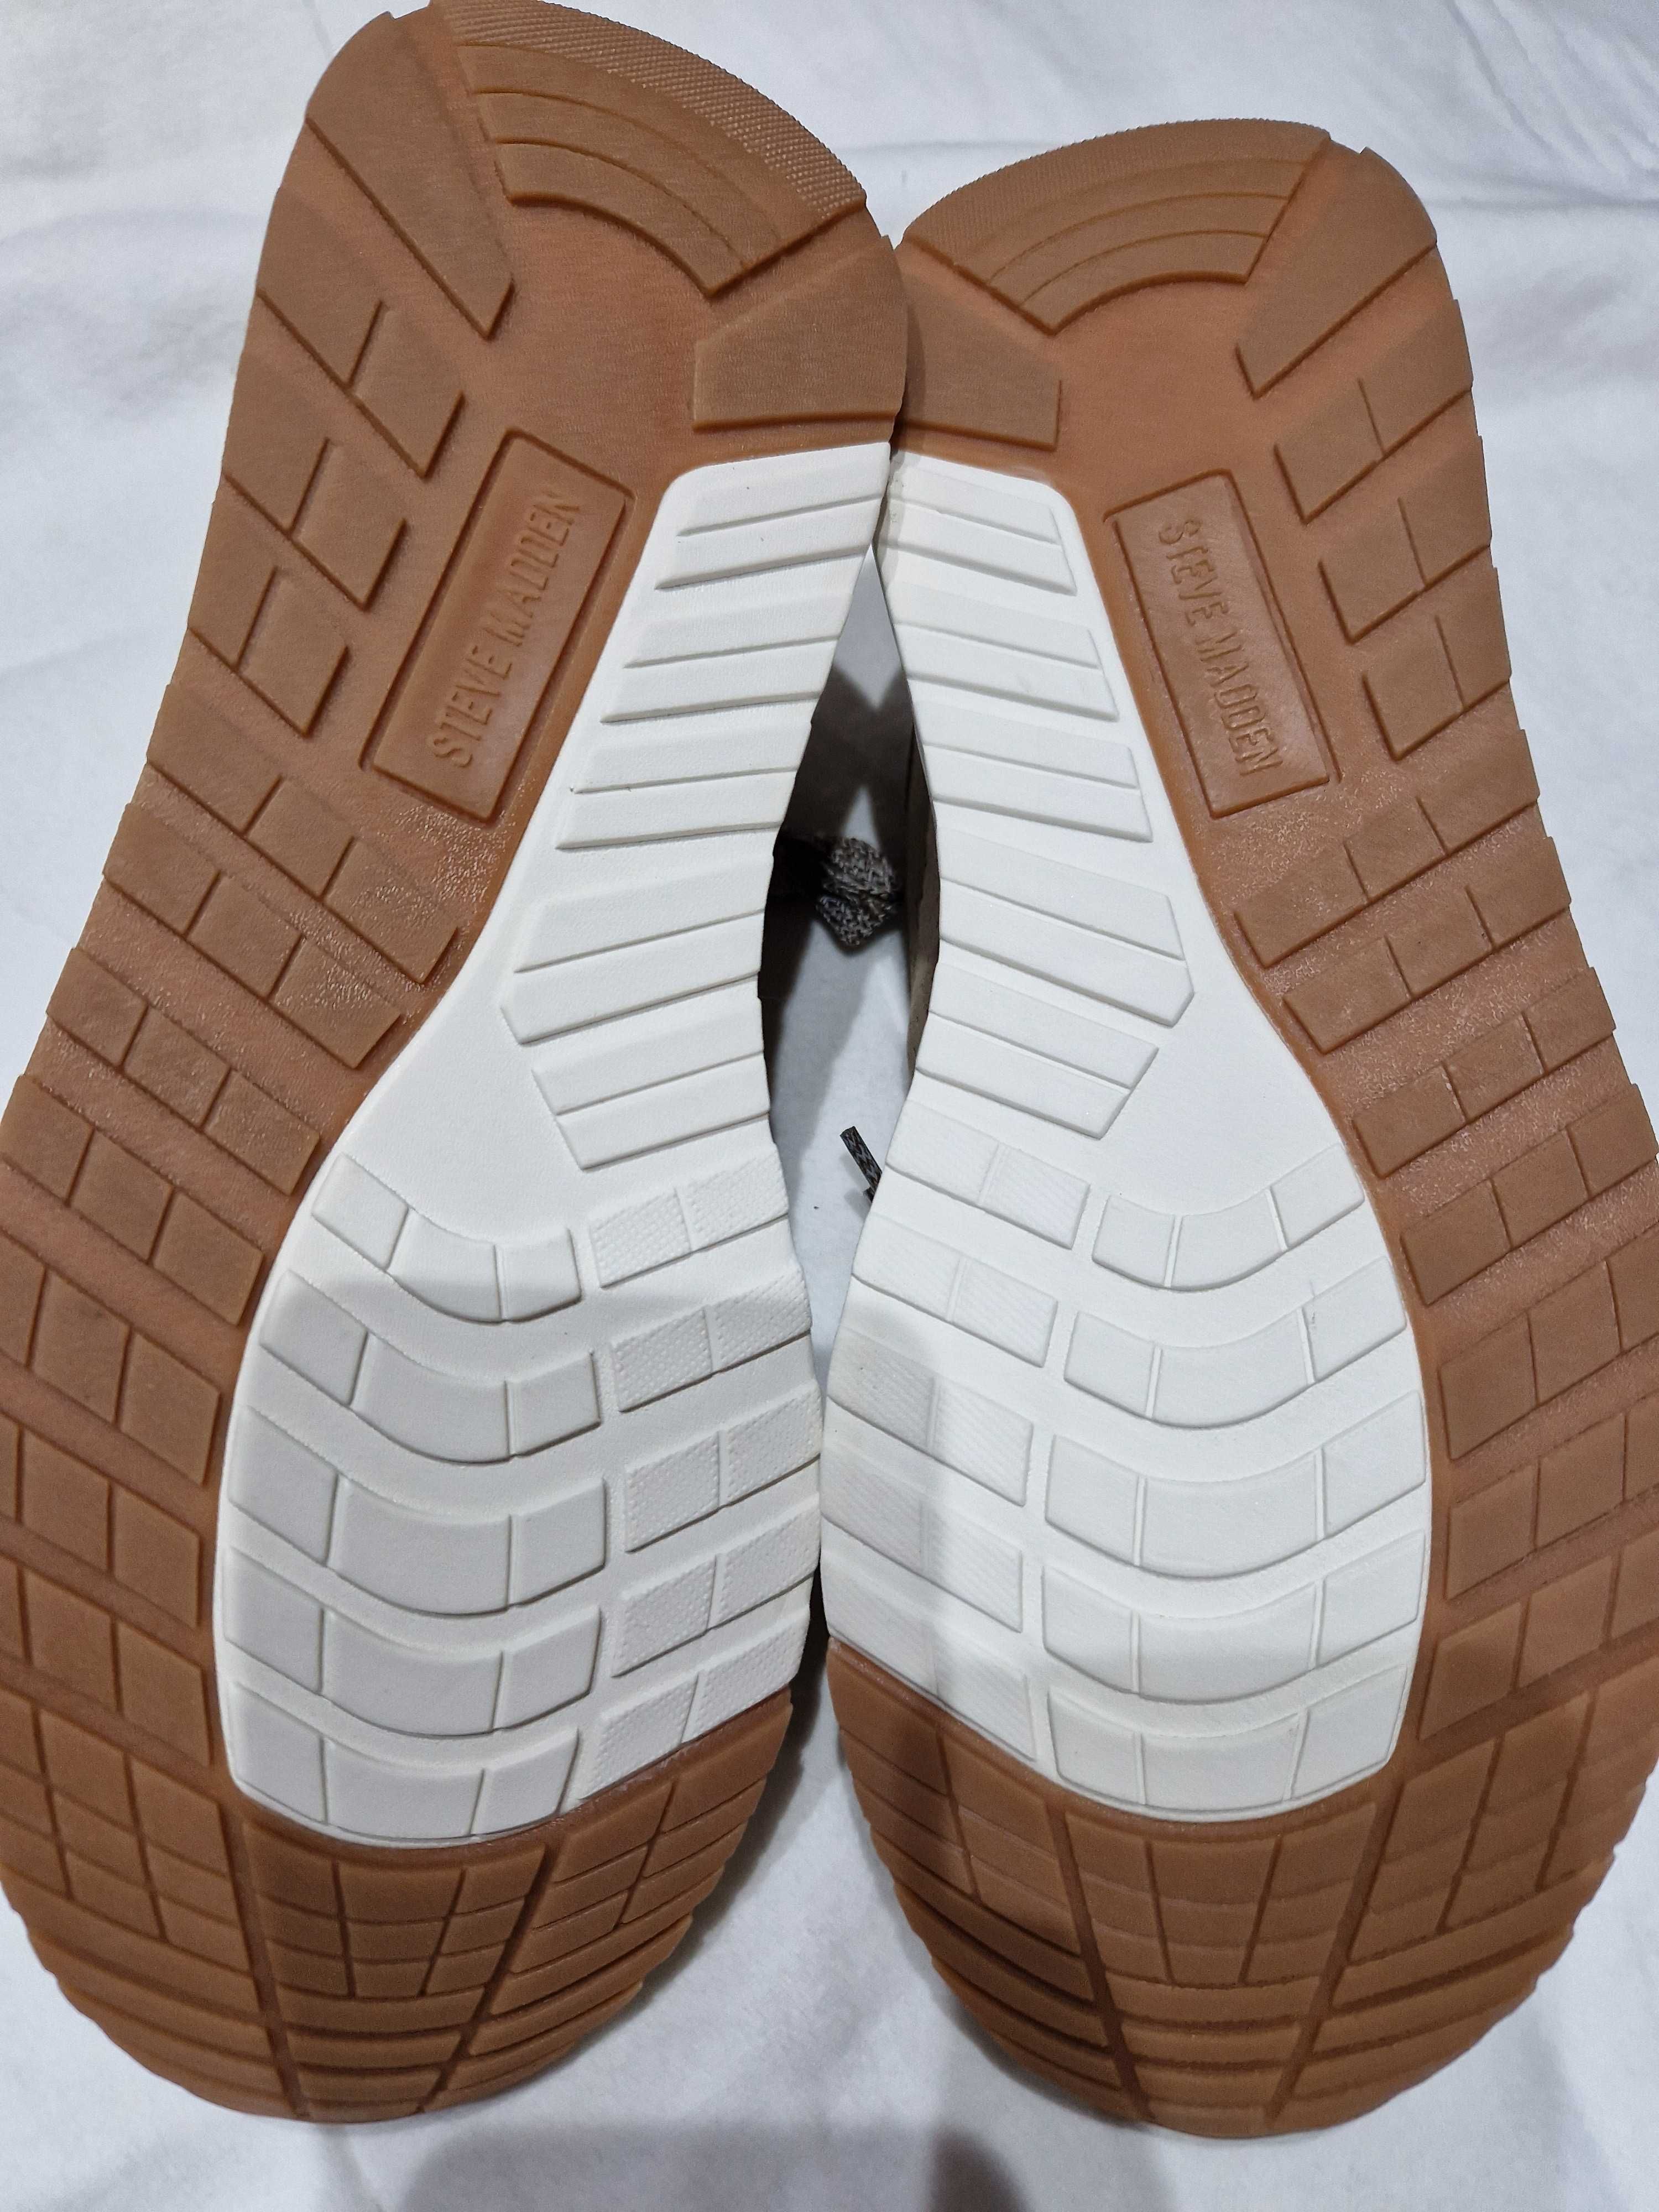 Steve Madden adidasi, pantofi sport